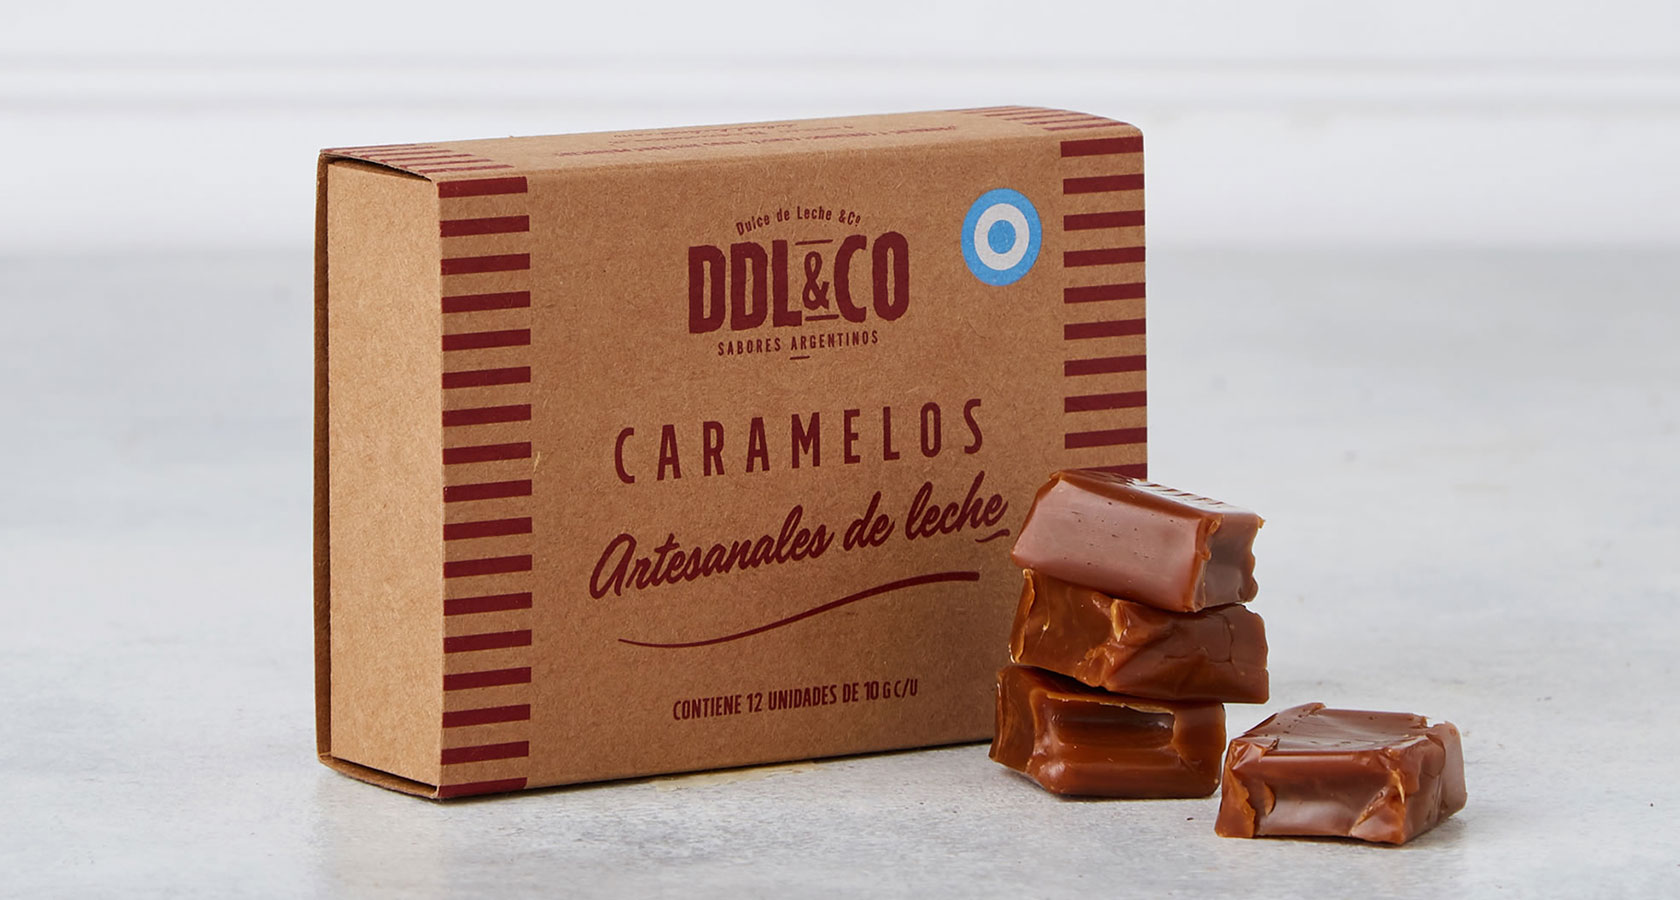 Packaging Caramelos de DulcedeLeche marianaalbarracin